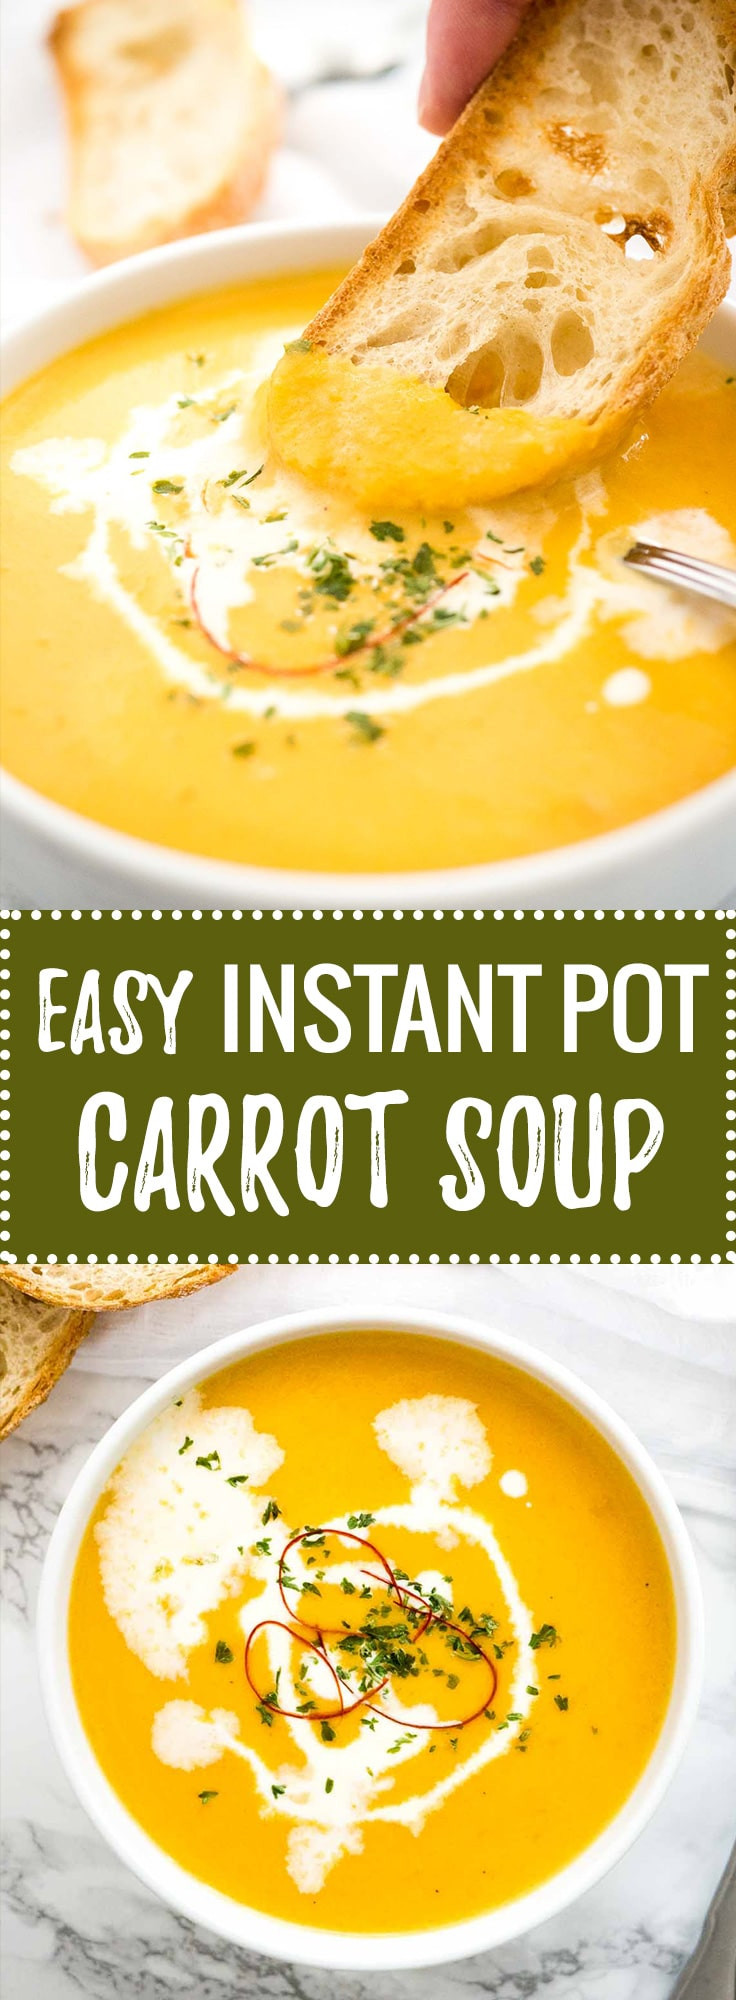 Carrot Soup Instant Pot
 Easy Instant Pot Carrot Soup with Coconut Milk